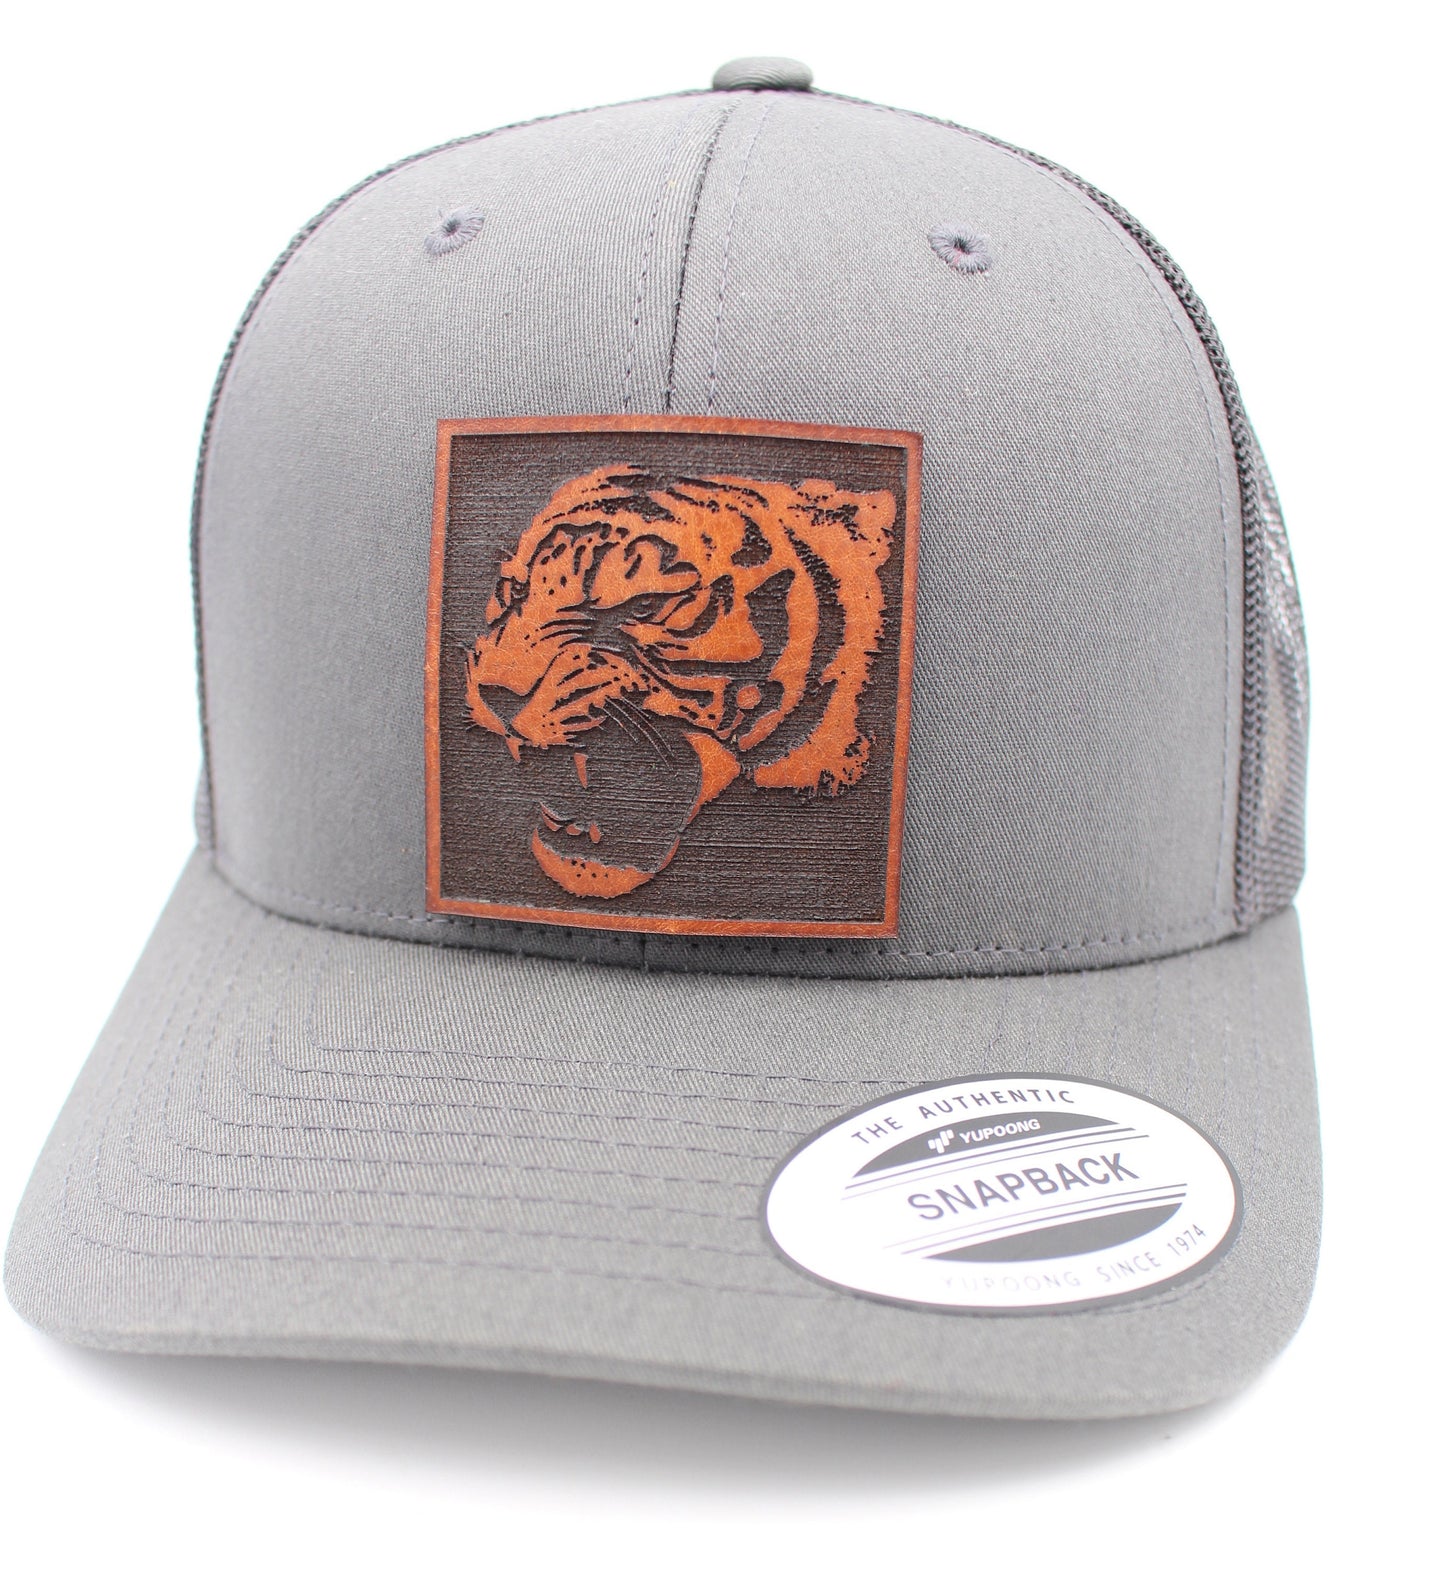 Tiger Hat | Angry Tiger Trucker Hat | Big Cat Art Trucker Hat